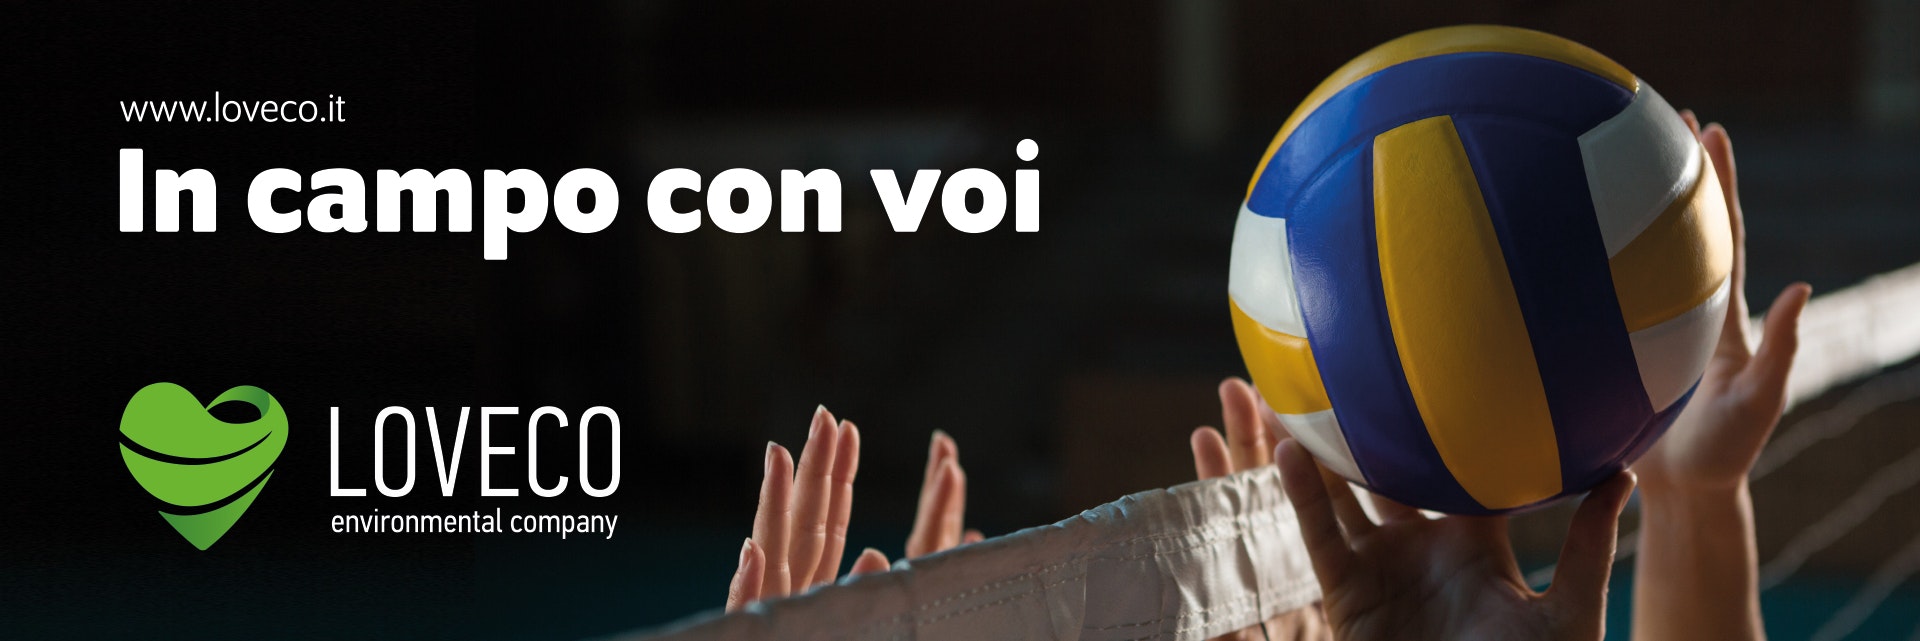 Loveco - Sponsor volley